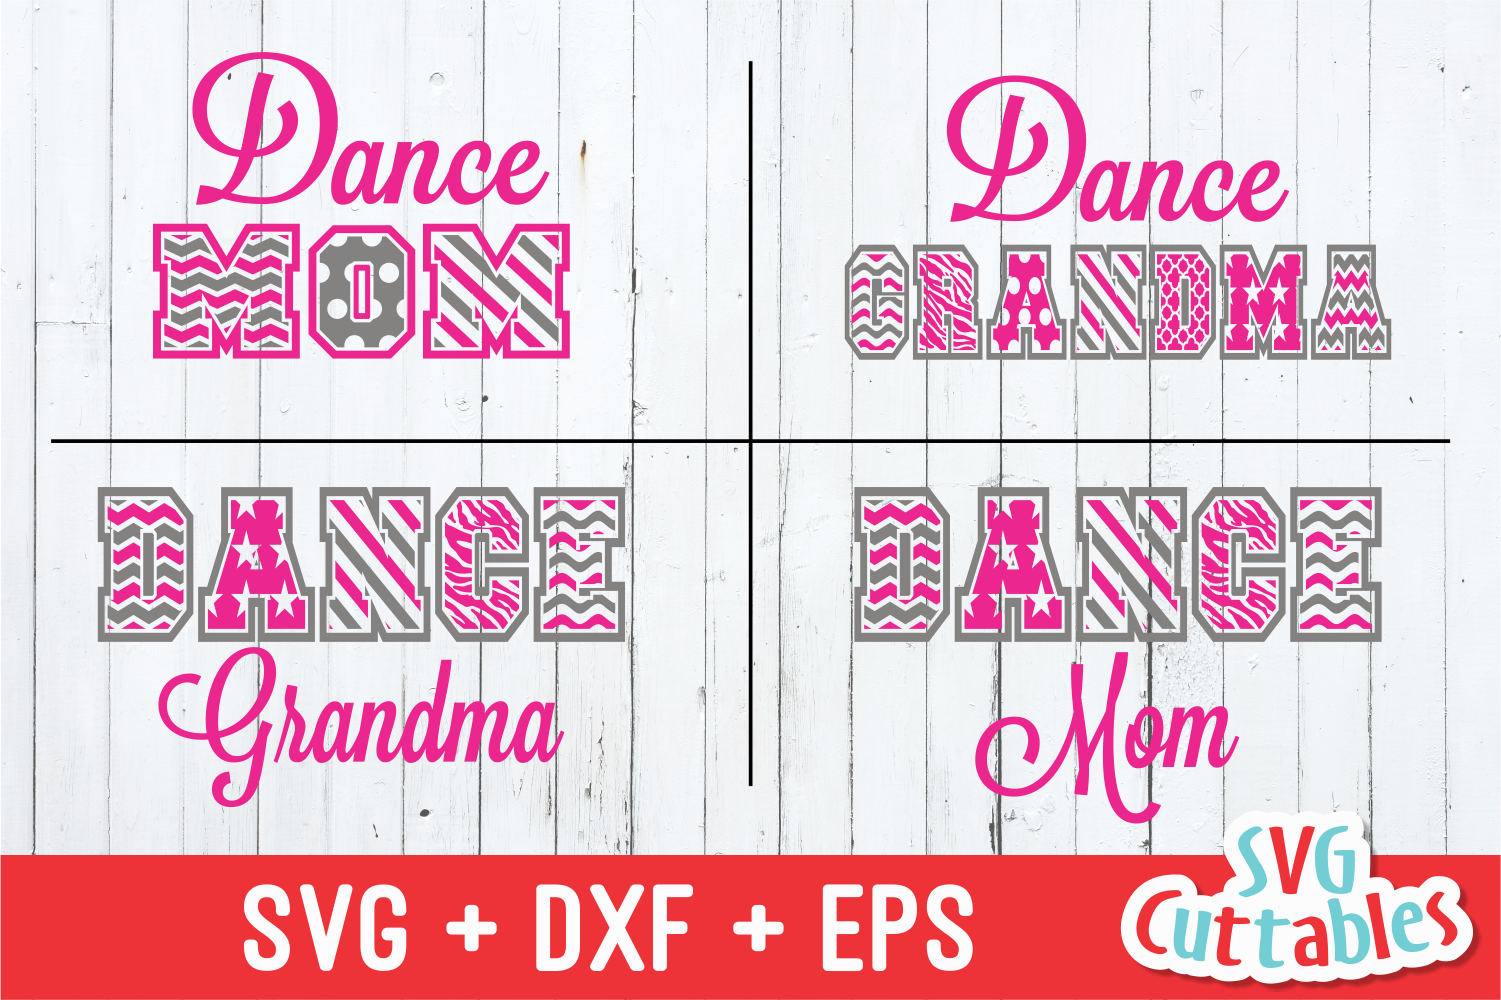 Dance Mom Dance Grandma Svg Cut File By Svg Cuttables Thehungryjpeg Com